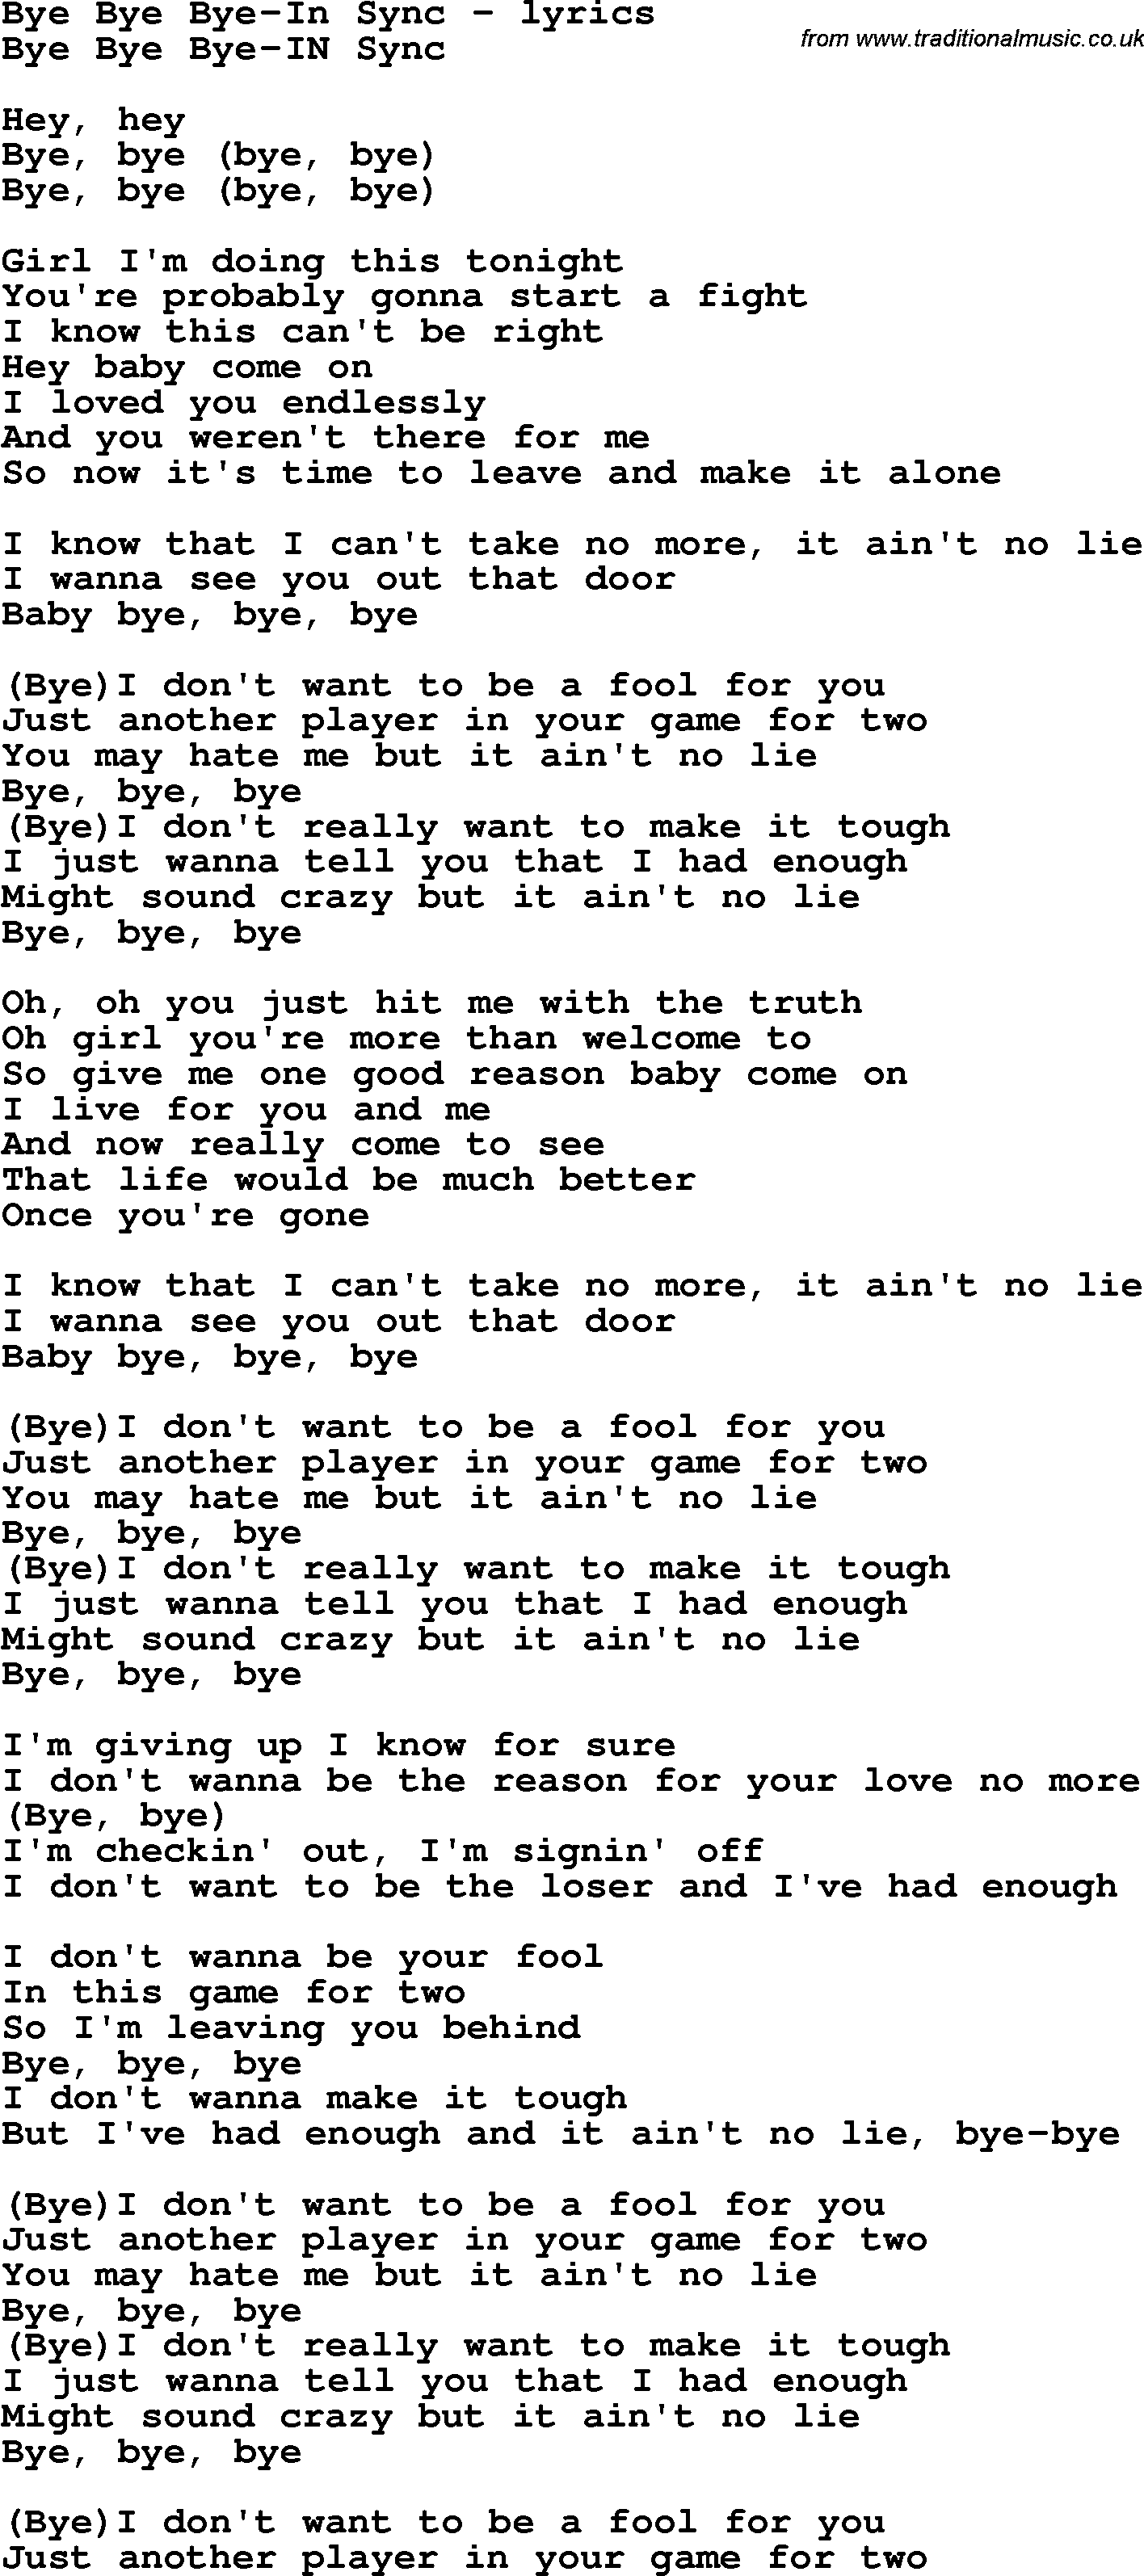 Love Song Lyrics For Bye Bye Bye In Sync